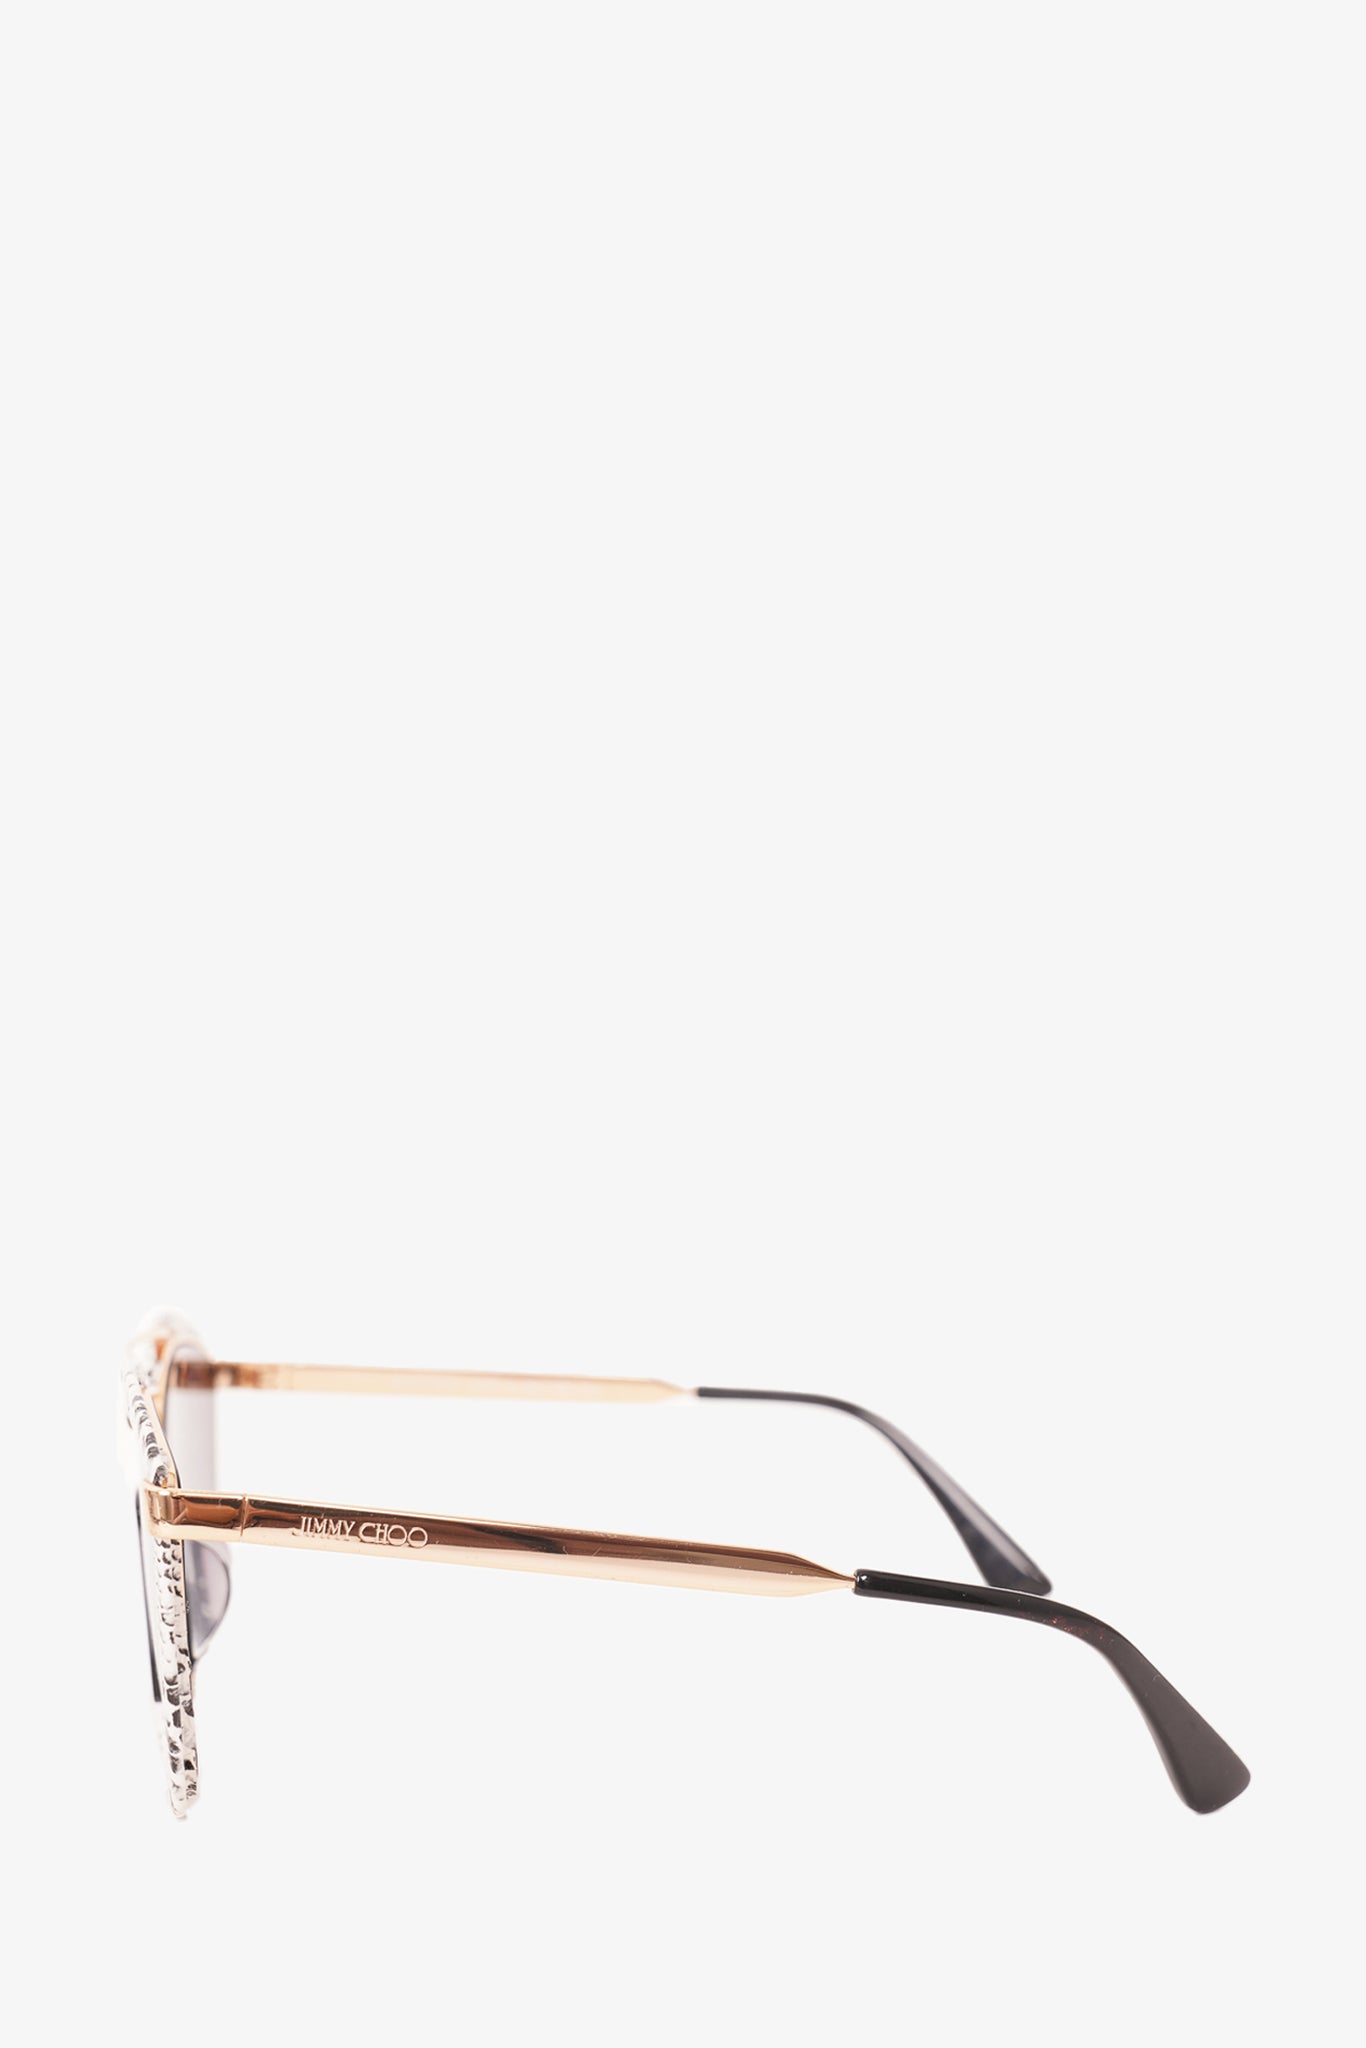 Jimmy Choo Python Print Frame Cat-Eye Gradient Sunglasses